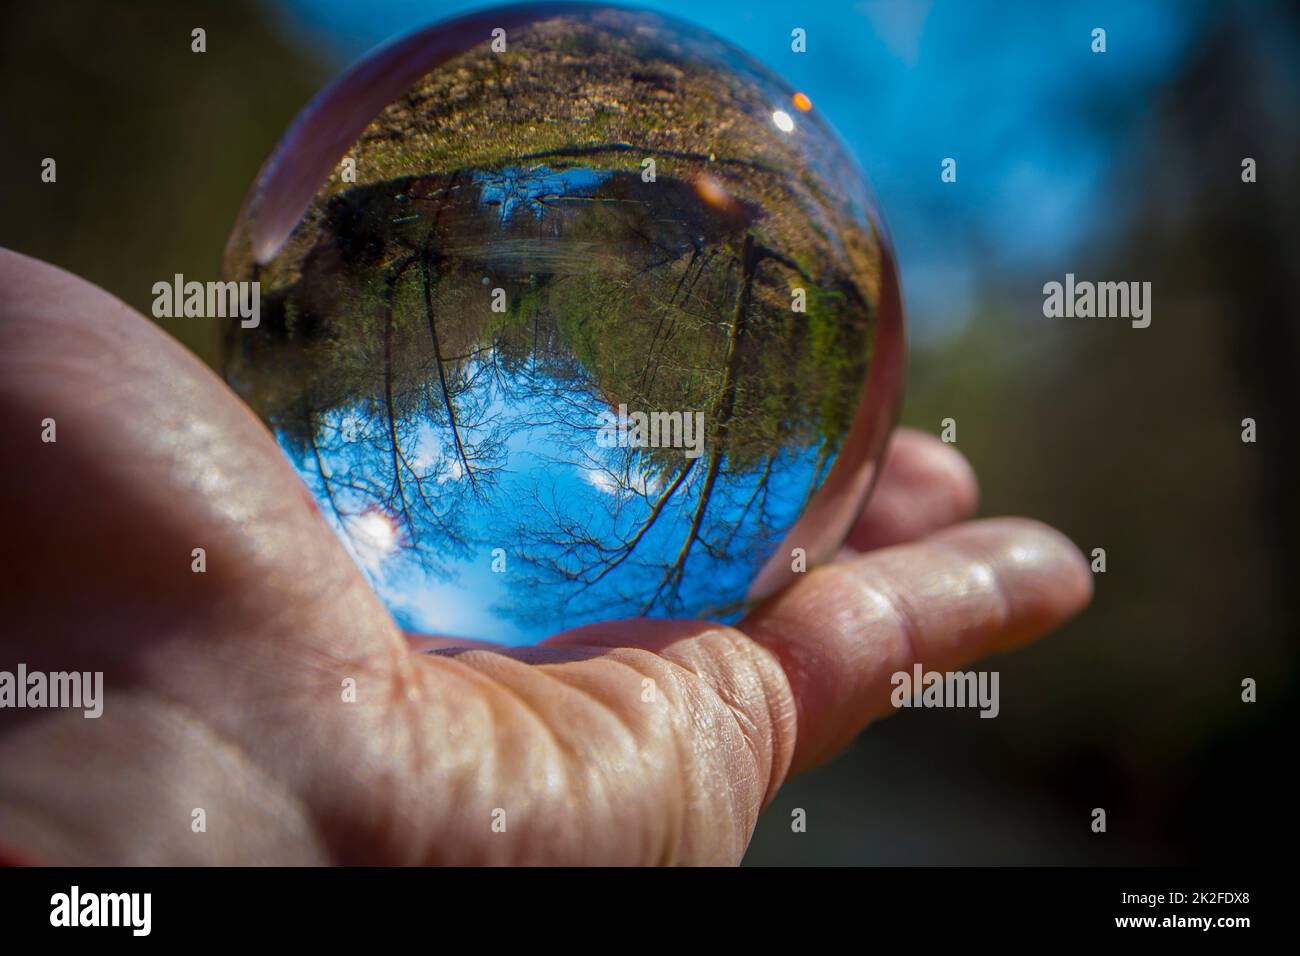 Mano sosteniendo una bola de vidrio con naturaleza invertida e imagen de paisaje Foto de stock